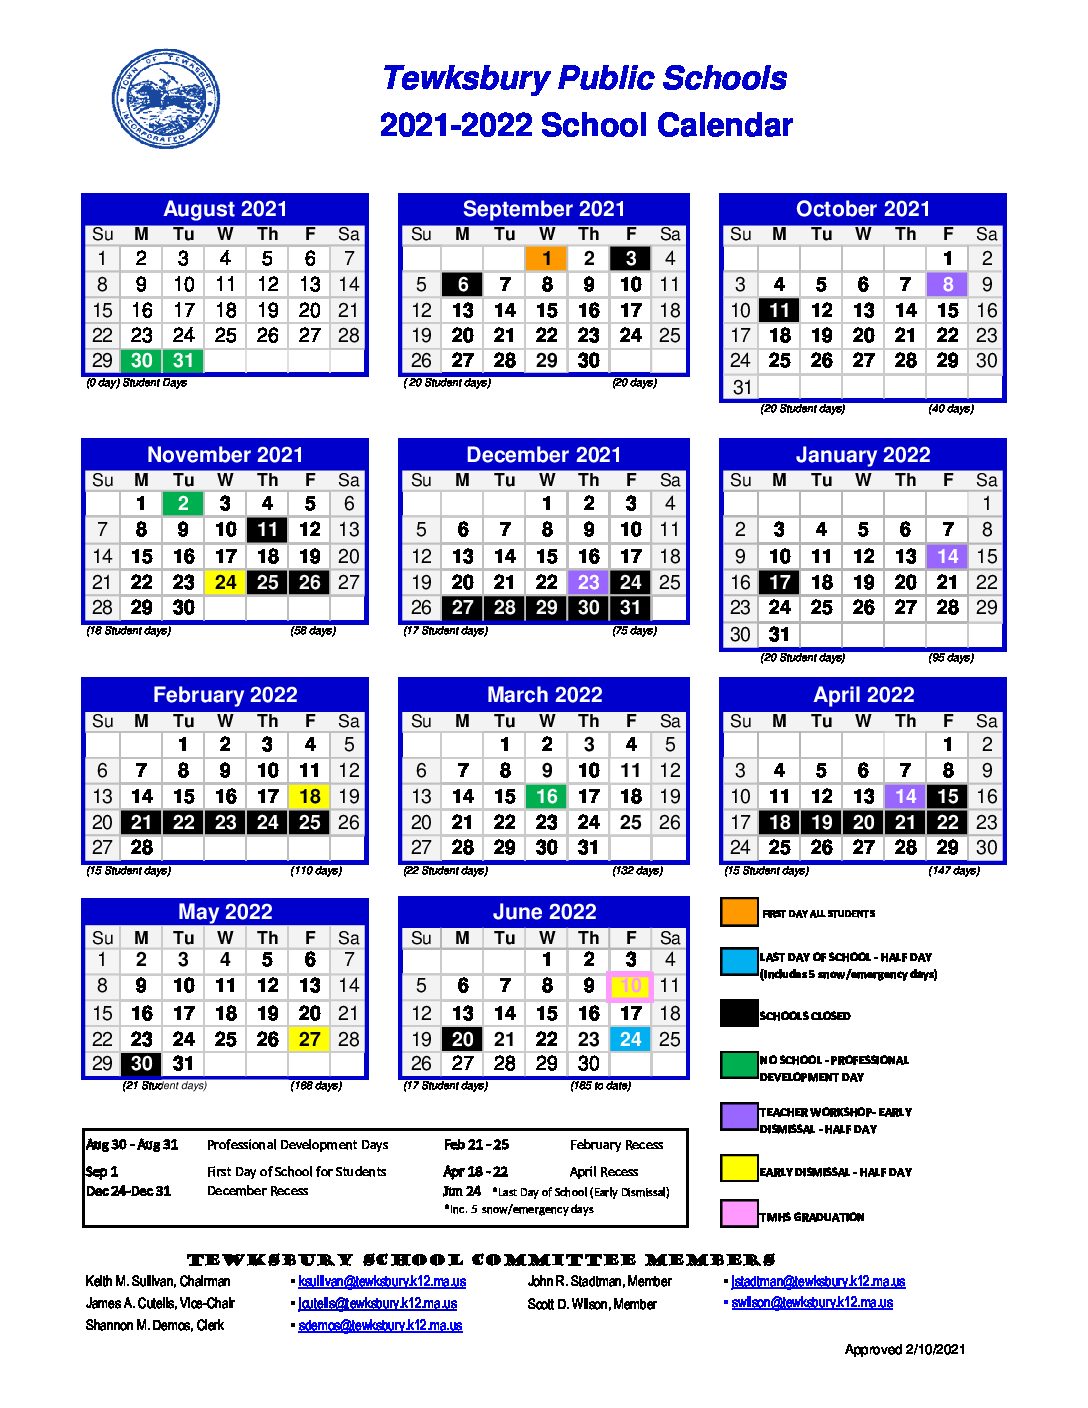 Tufts Academic Calendar 2022 23 2021-2022 School Calendar - Tewksbury Public Schools